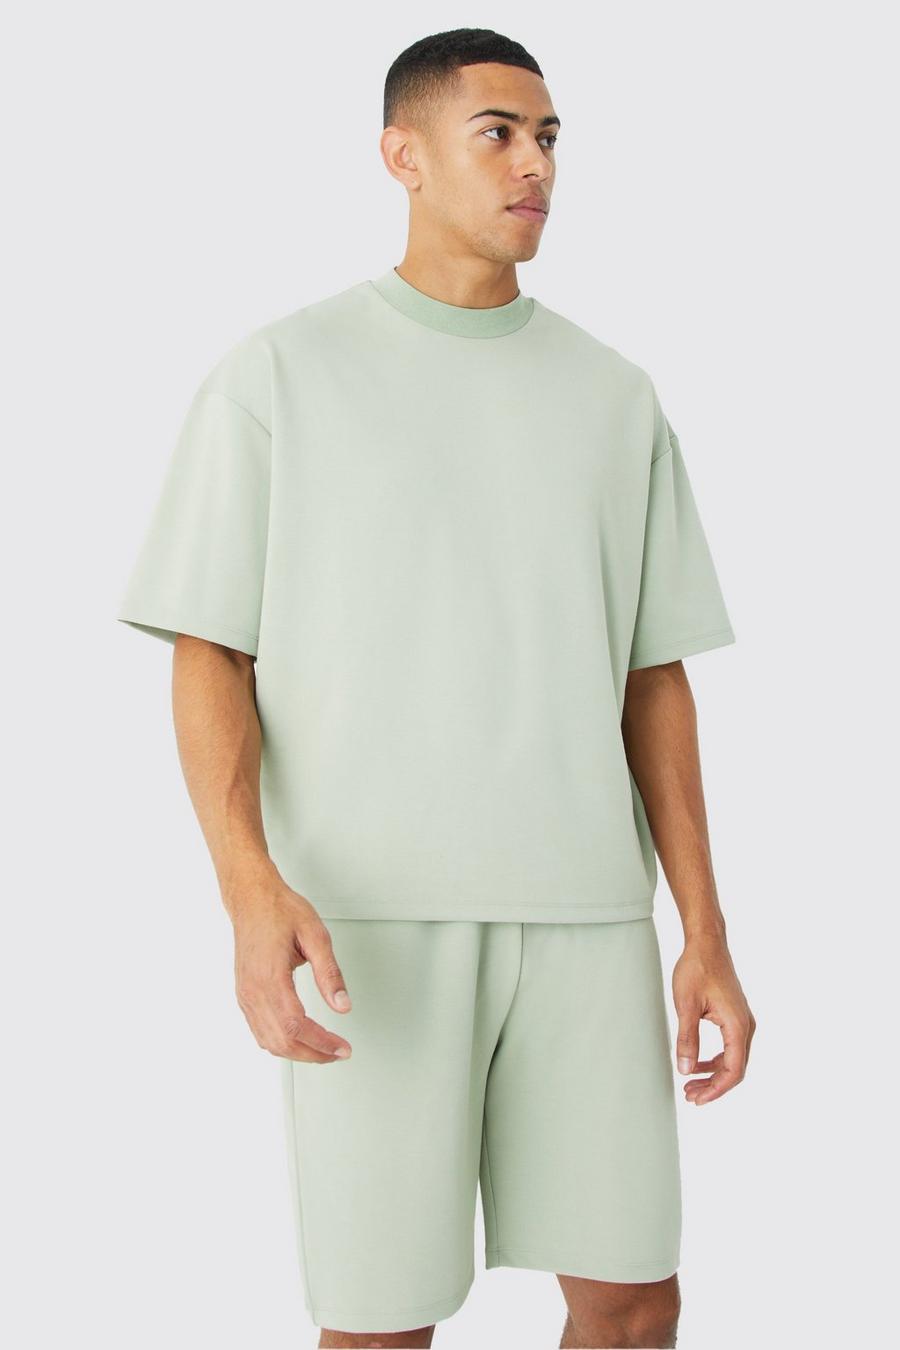 Sage Premium Oversize t-shirt och shorts i supertjockt tyg